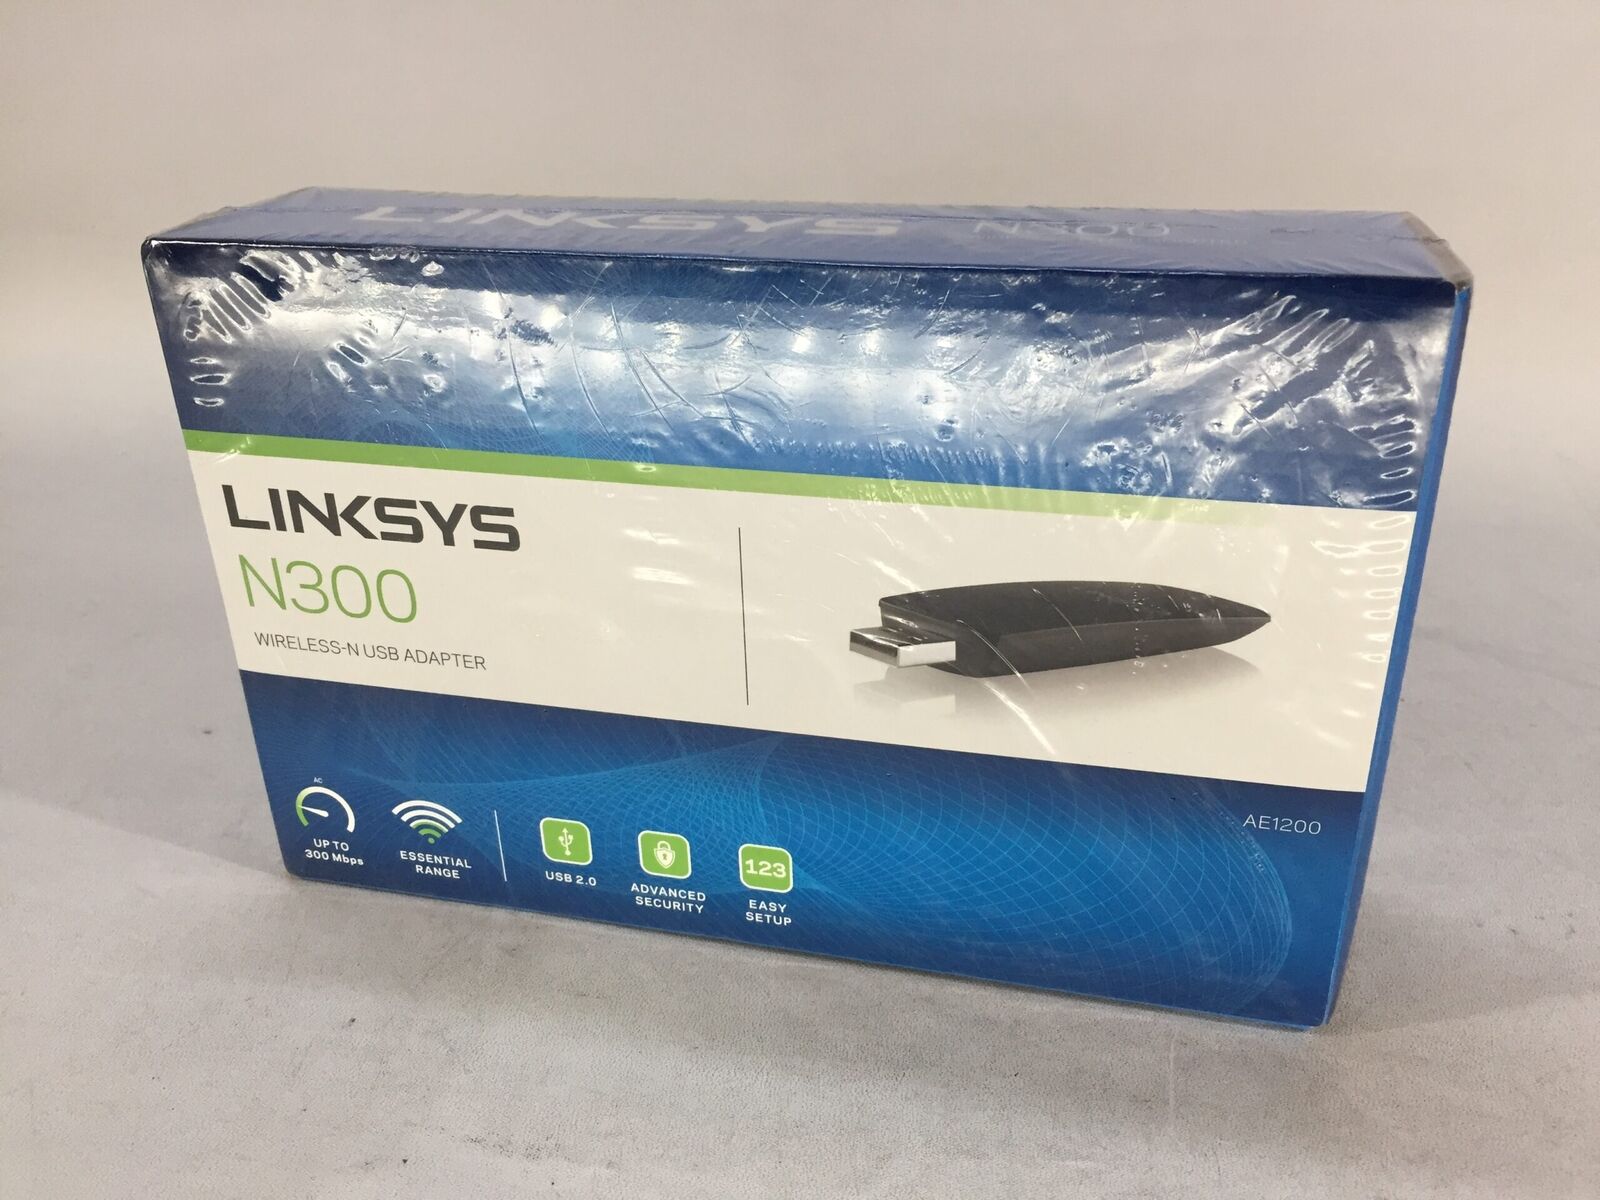 Linksys Wireless-N USB Adapter - Model: N300 - New